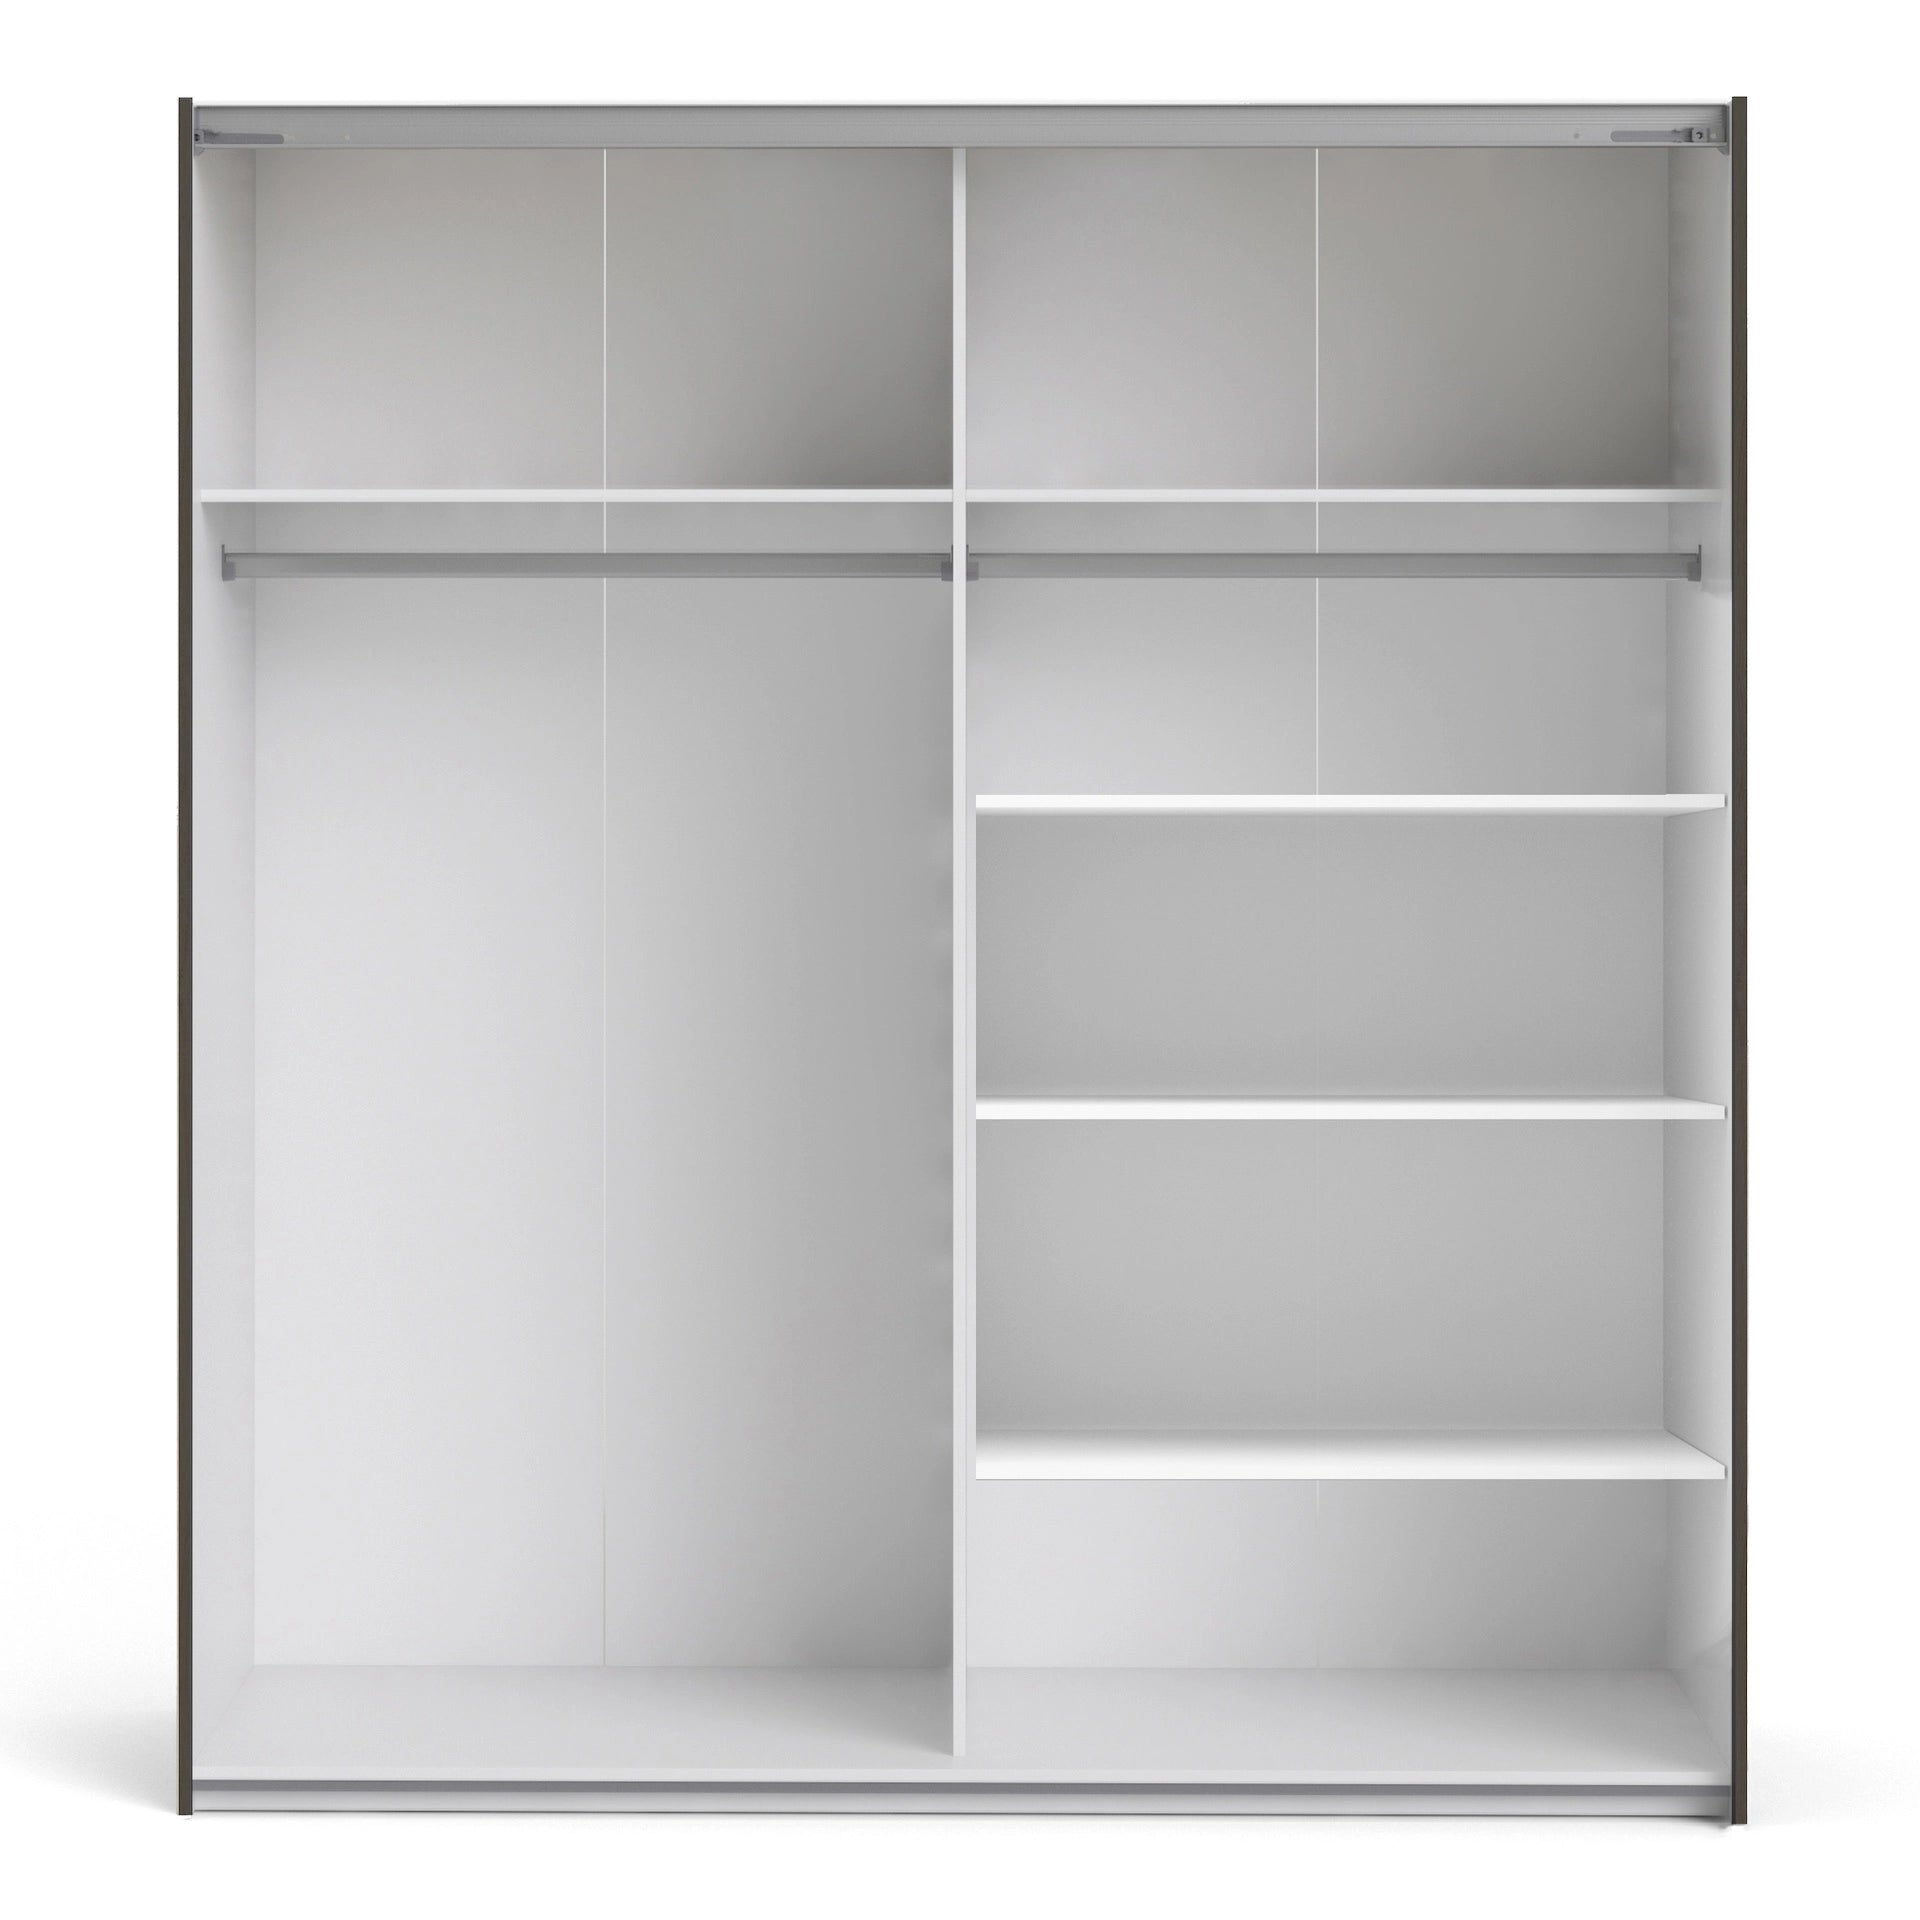 Furniture To Go Verona Sliding Wardrobe 180cm in Black Matt with Mirror Doors with 5 Shelves